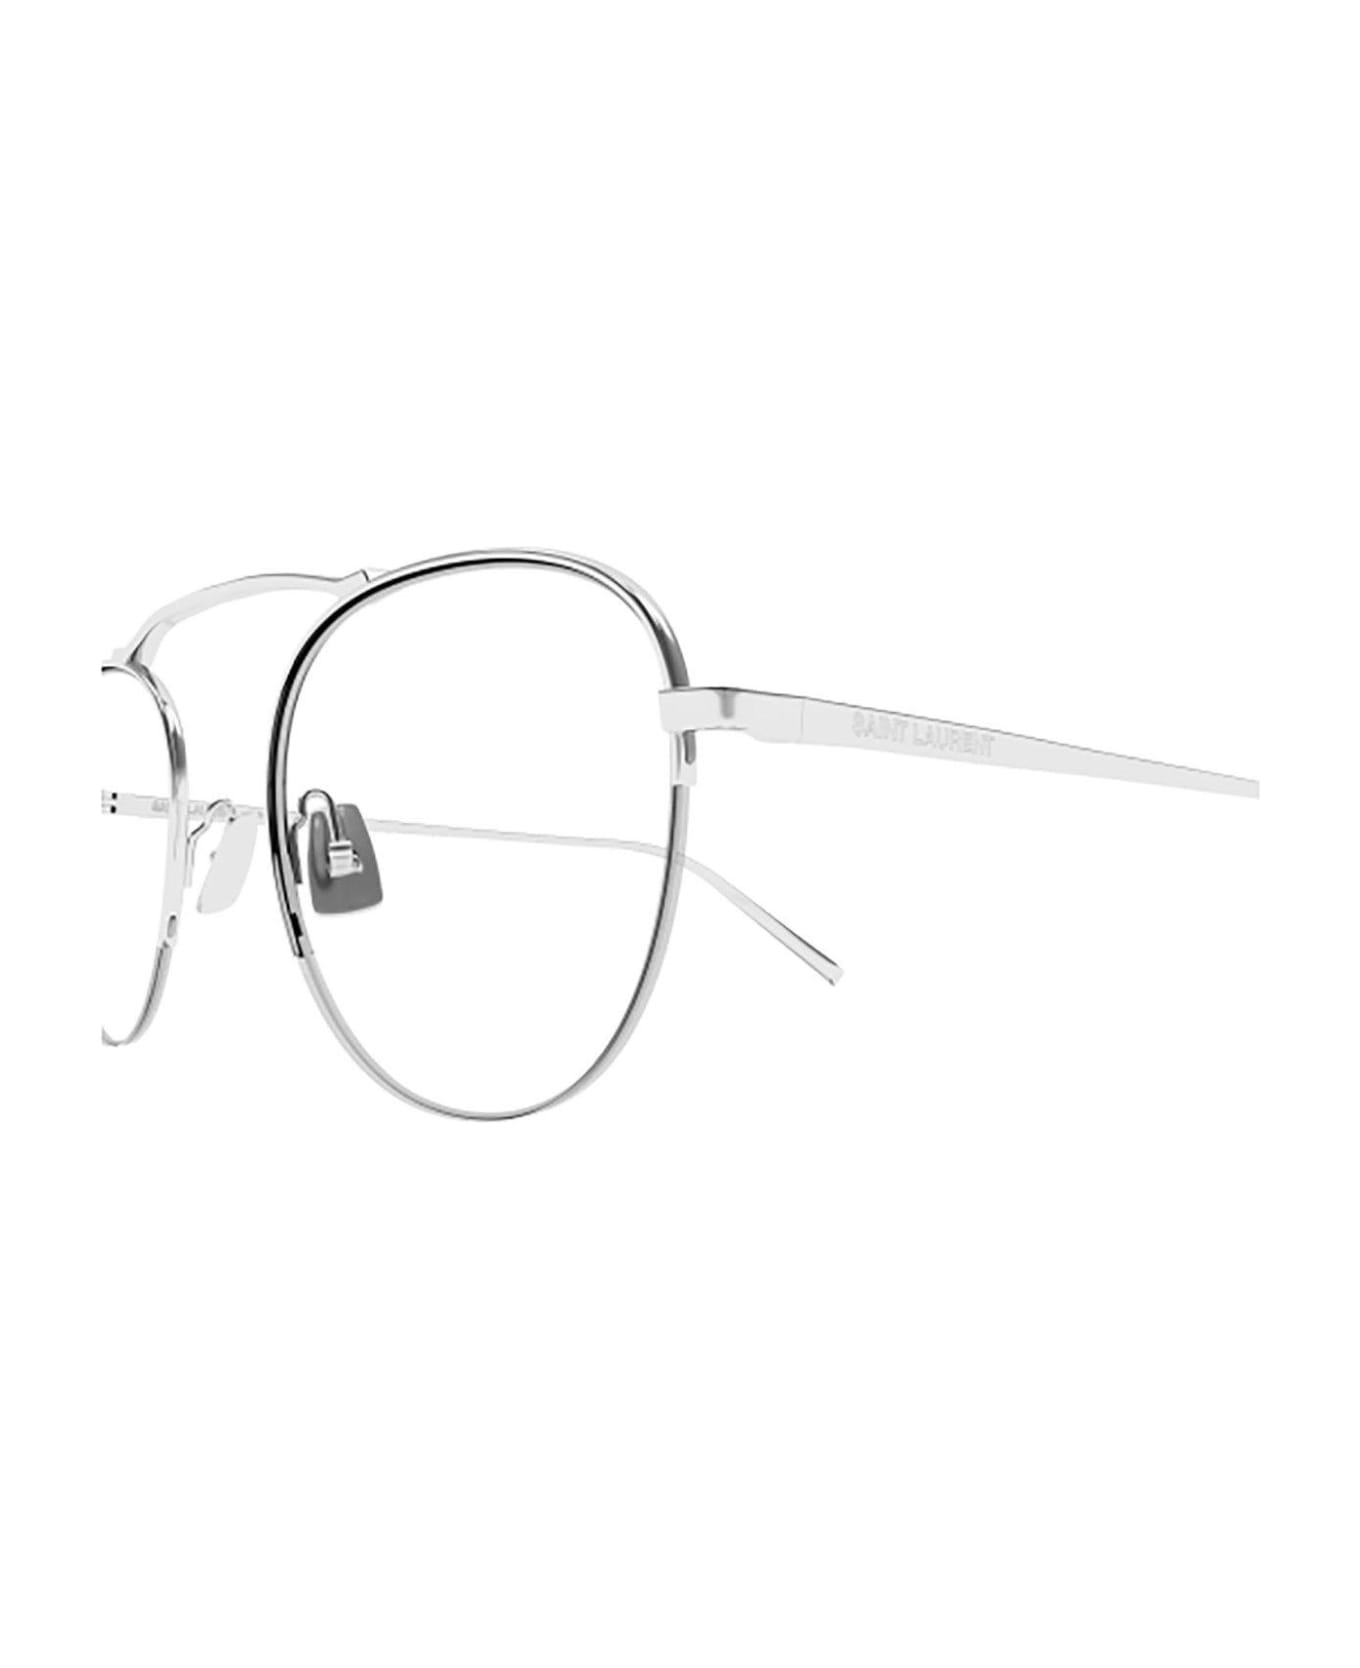 Saint Laurent Eyewear Round Frame Glasses - 001 silver silver transpa